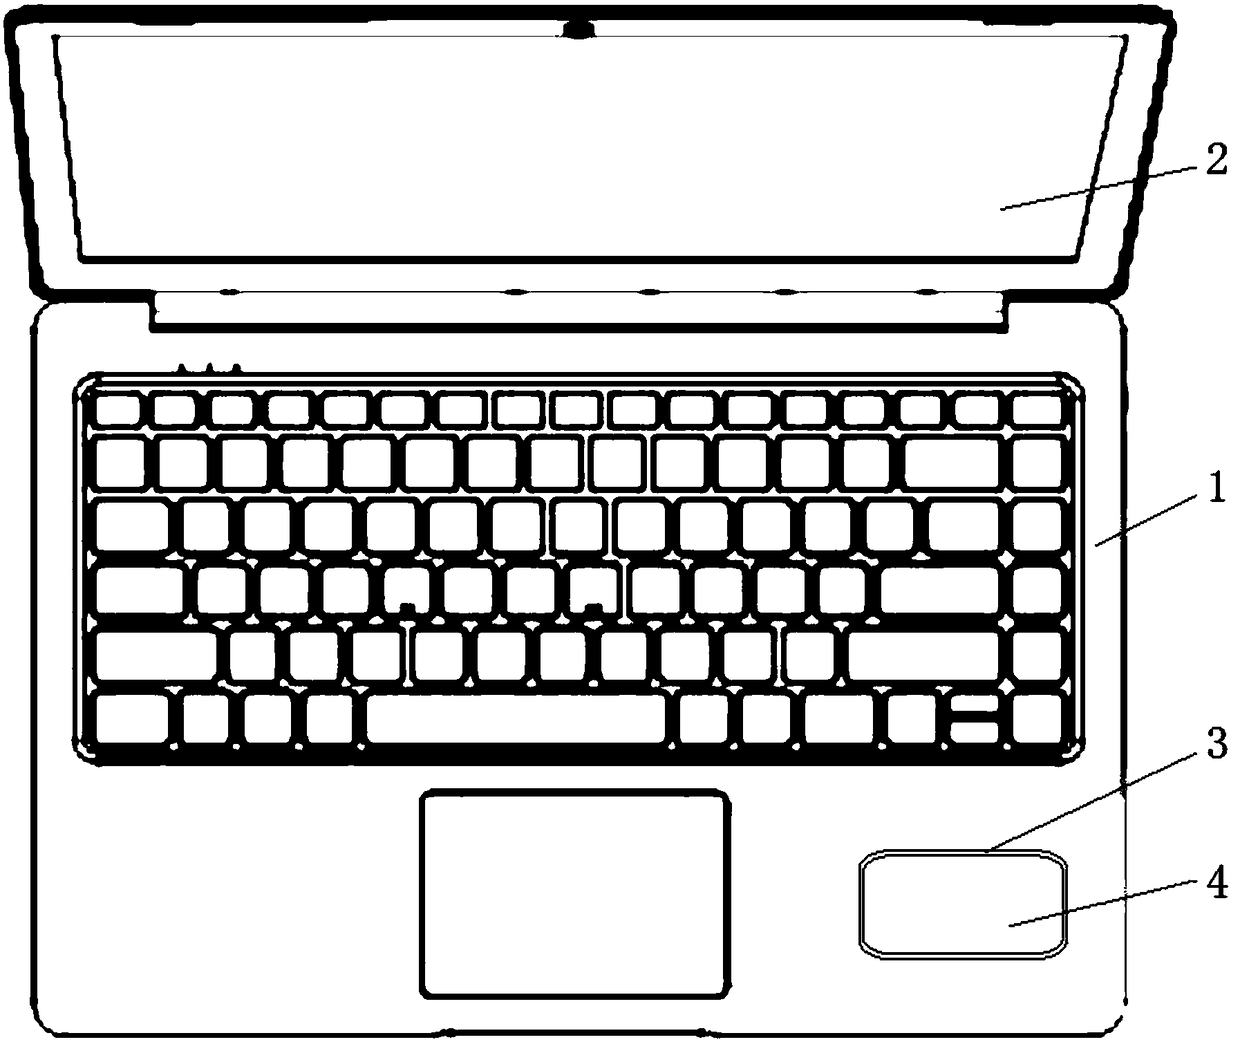 Portable smart notebook computer